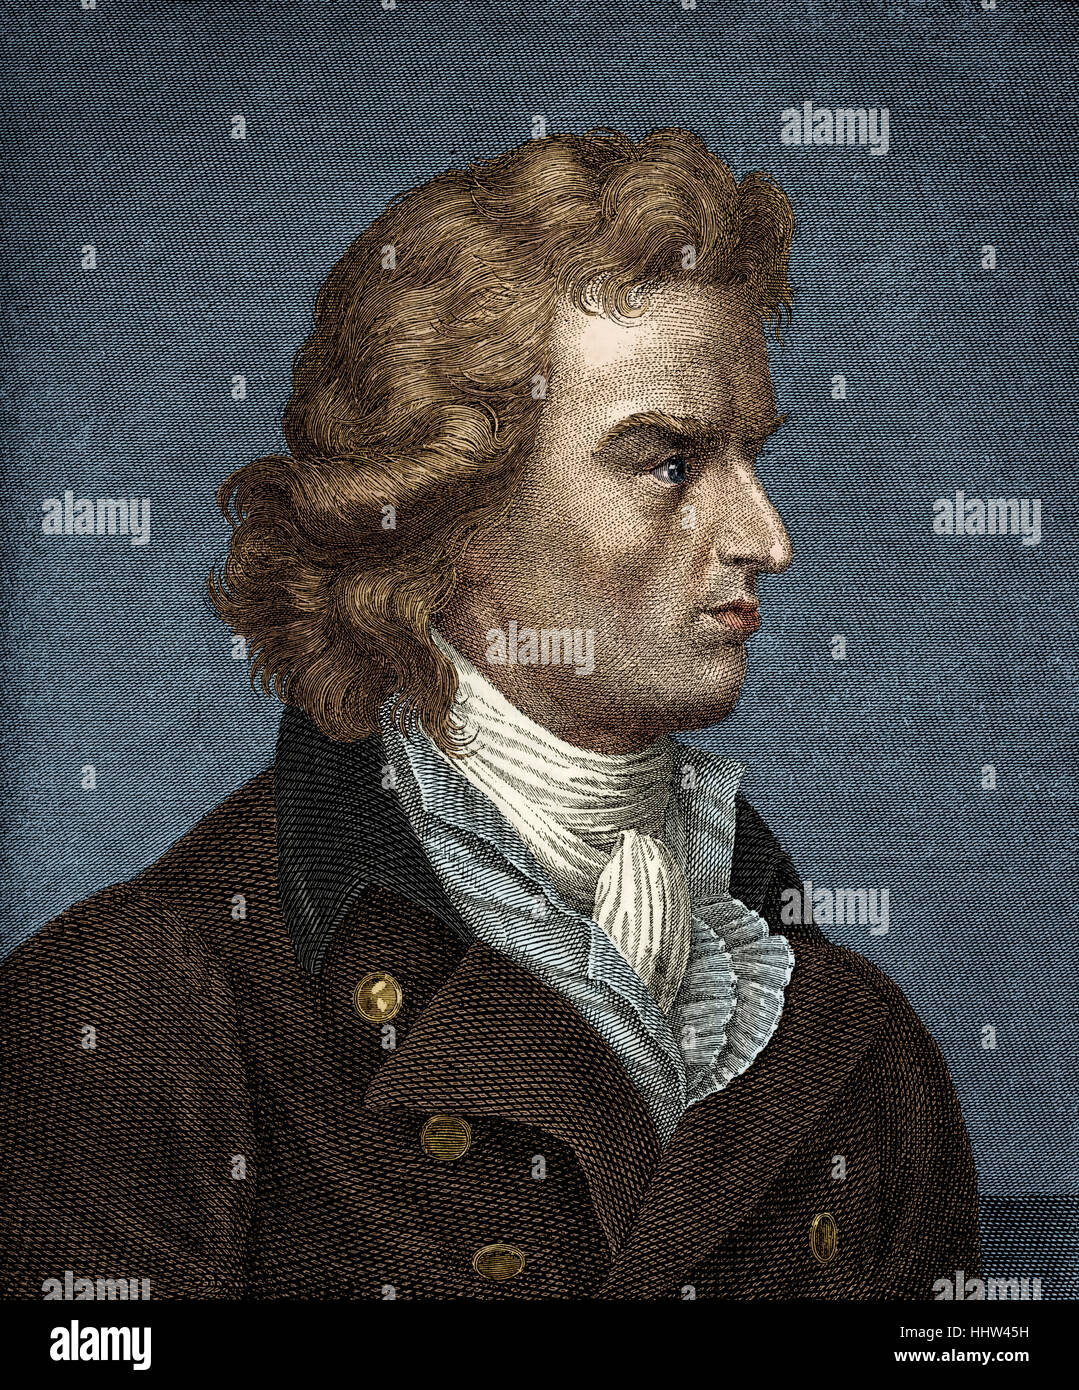 Friedrich von Schiller - portrait. German poet and dramatist 10 November 1759 - 9 May 1805.  Wrote 'Ode to Joy' (Beethoven 's Stock Photo